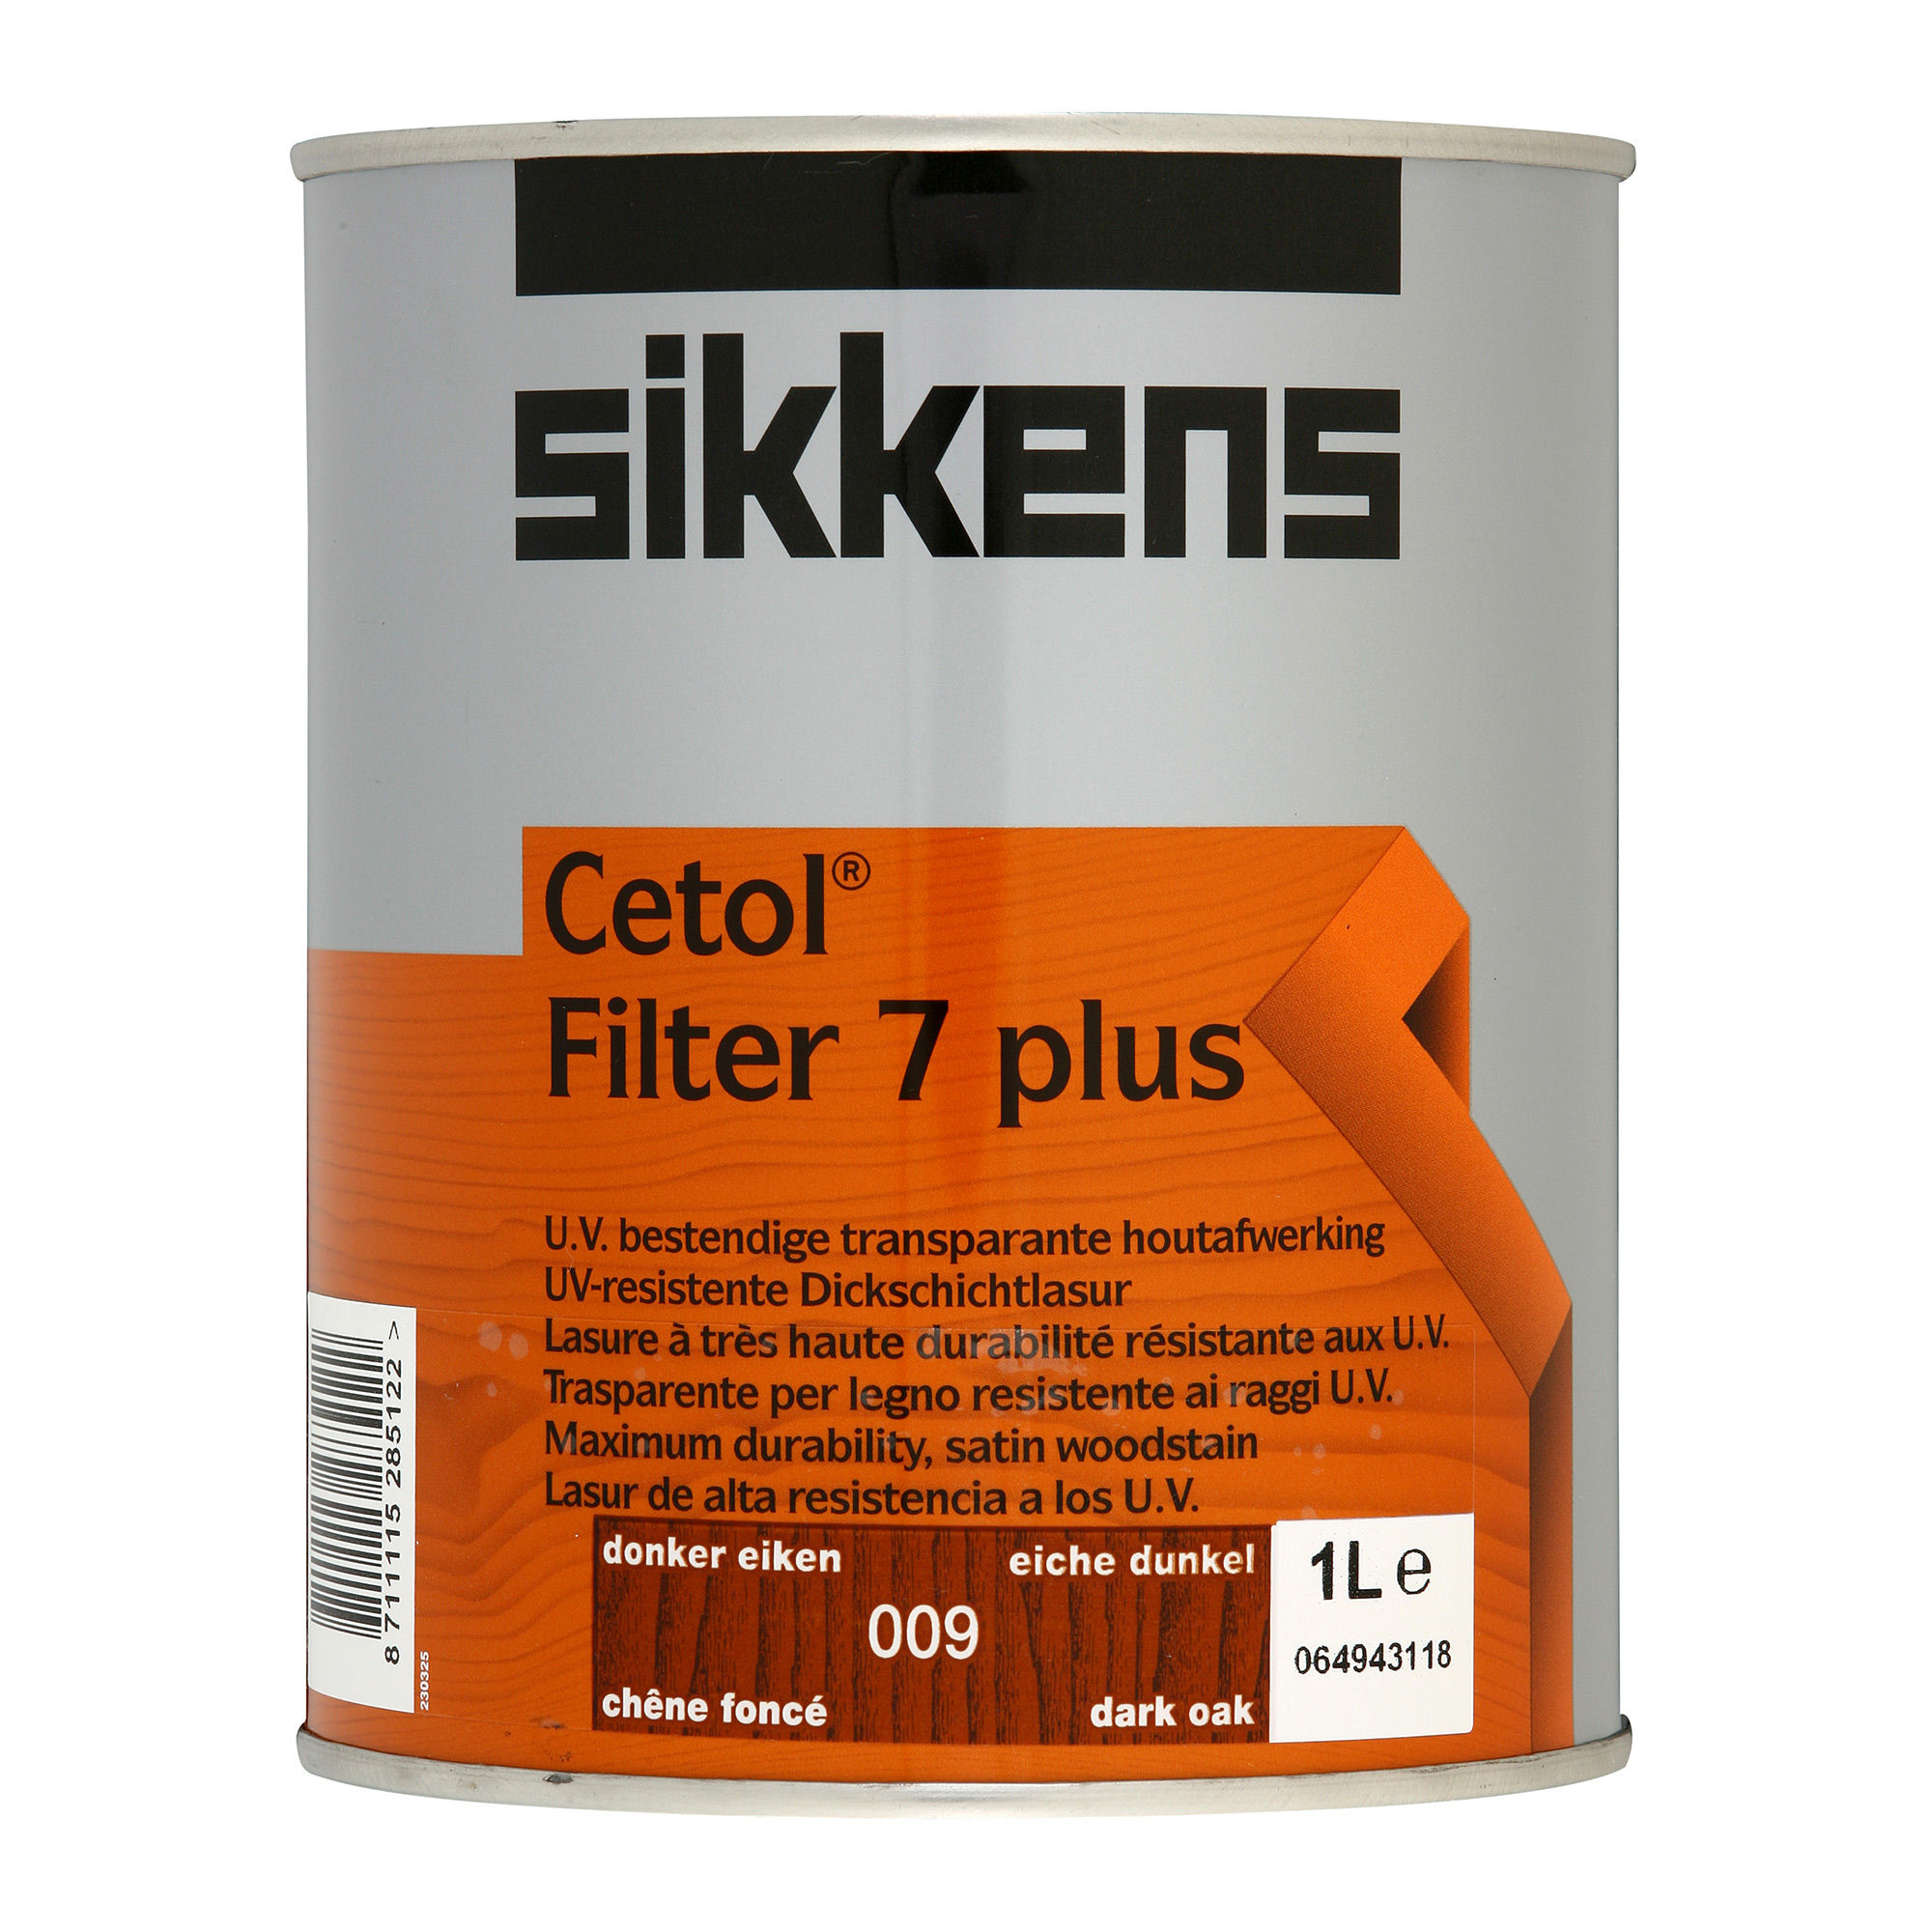 Sikkens Cetol Filter 7 Plus Wood Stain – Dark Oak 009 (1L)